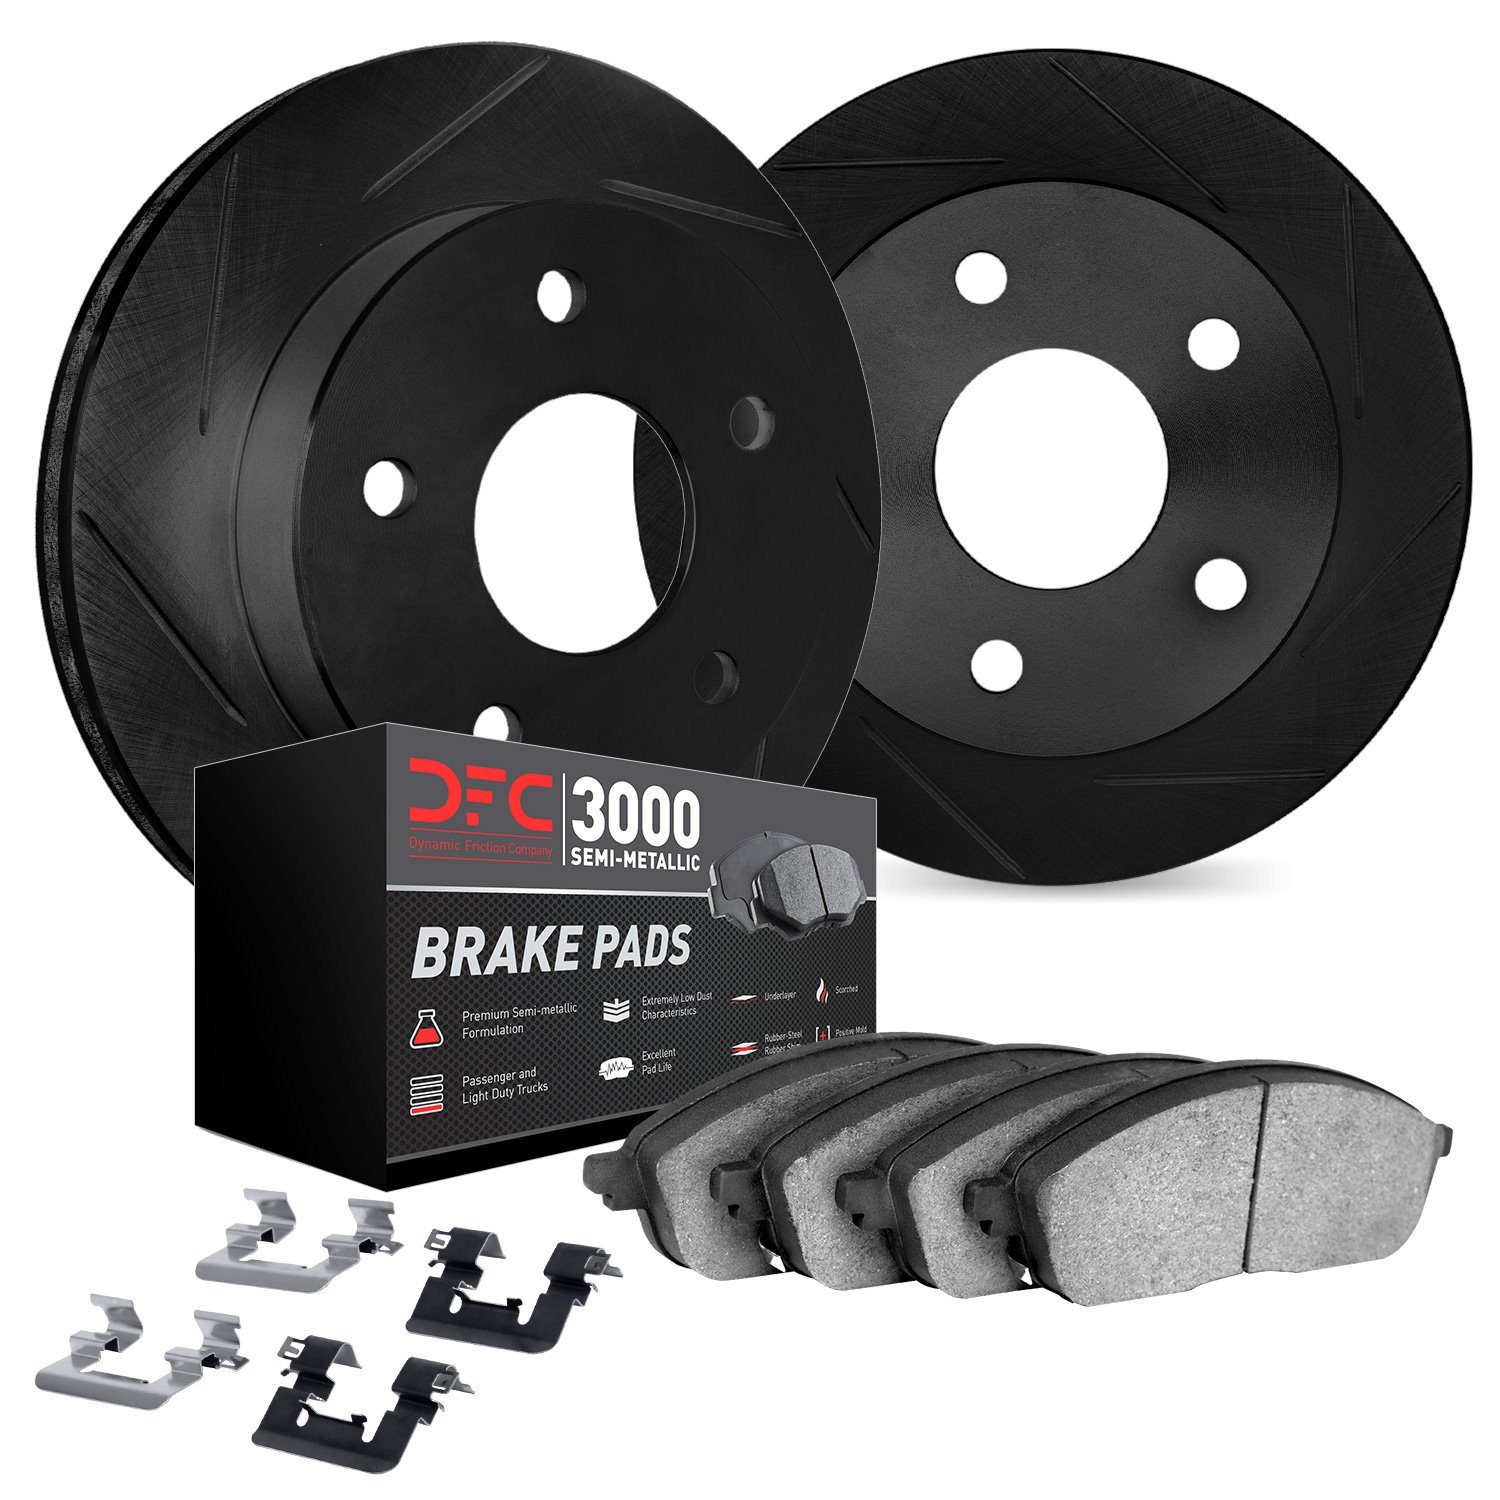 3112-67101 Slotted Brake Rotors with 3000-Series Semi-Metallic Brake Pads Kit & Hardware [Black], Fits Select Multiple Makes/Mod